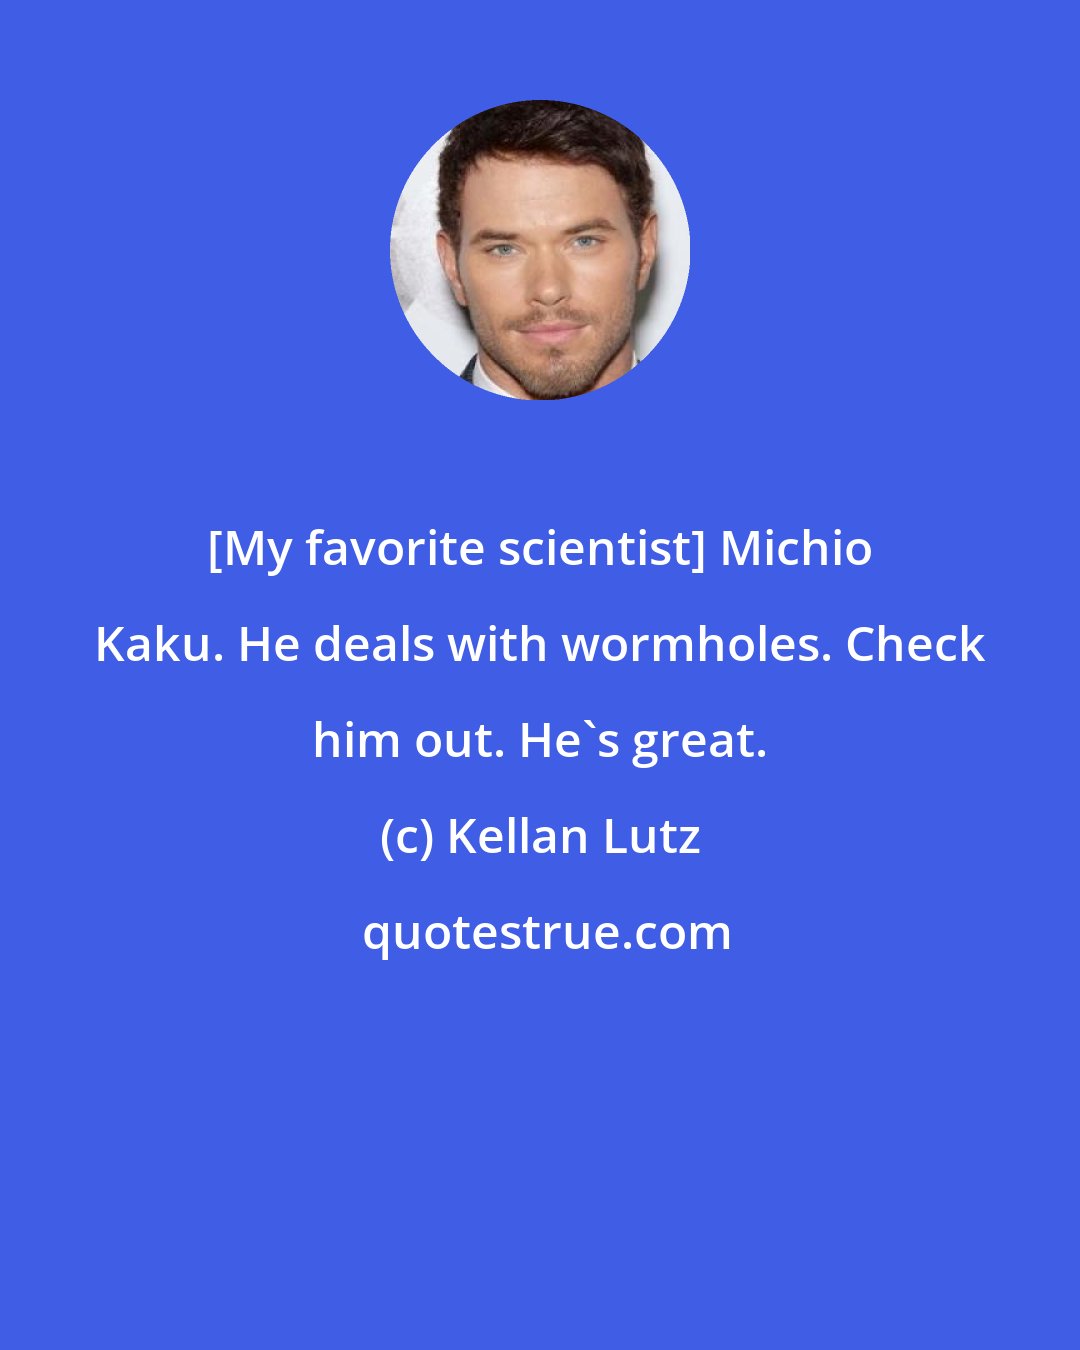 Kellan Lutz: [My favorite scientist] Michio Kaku. He deals with wormholes. Check him out. He's great.